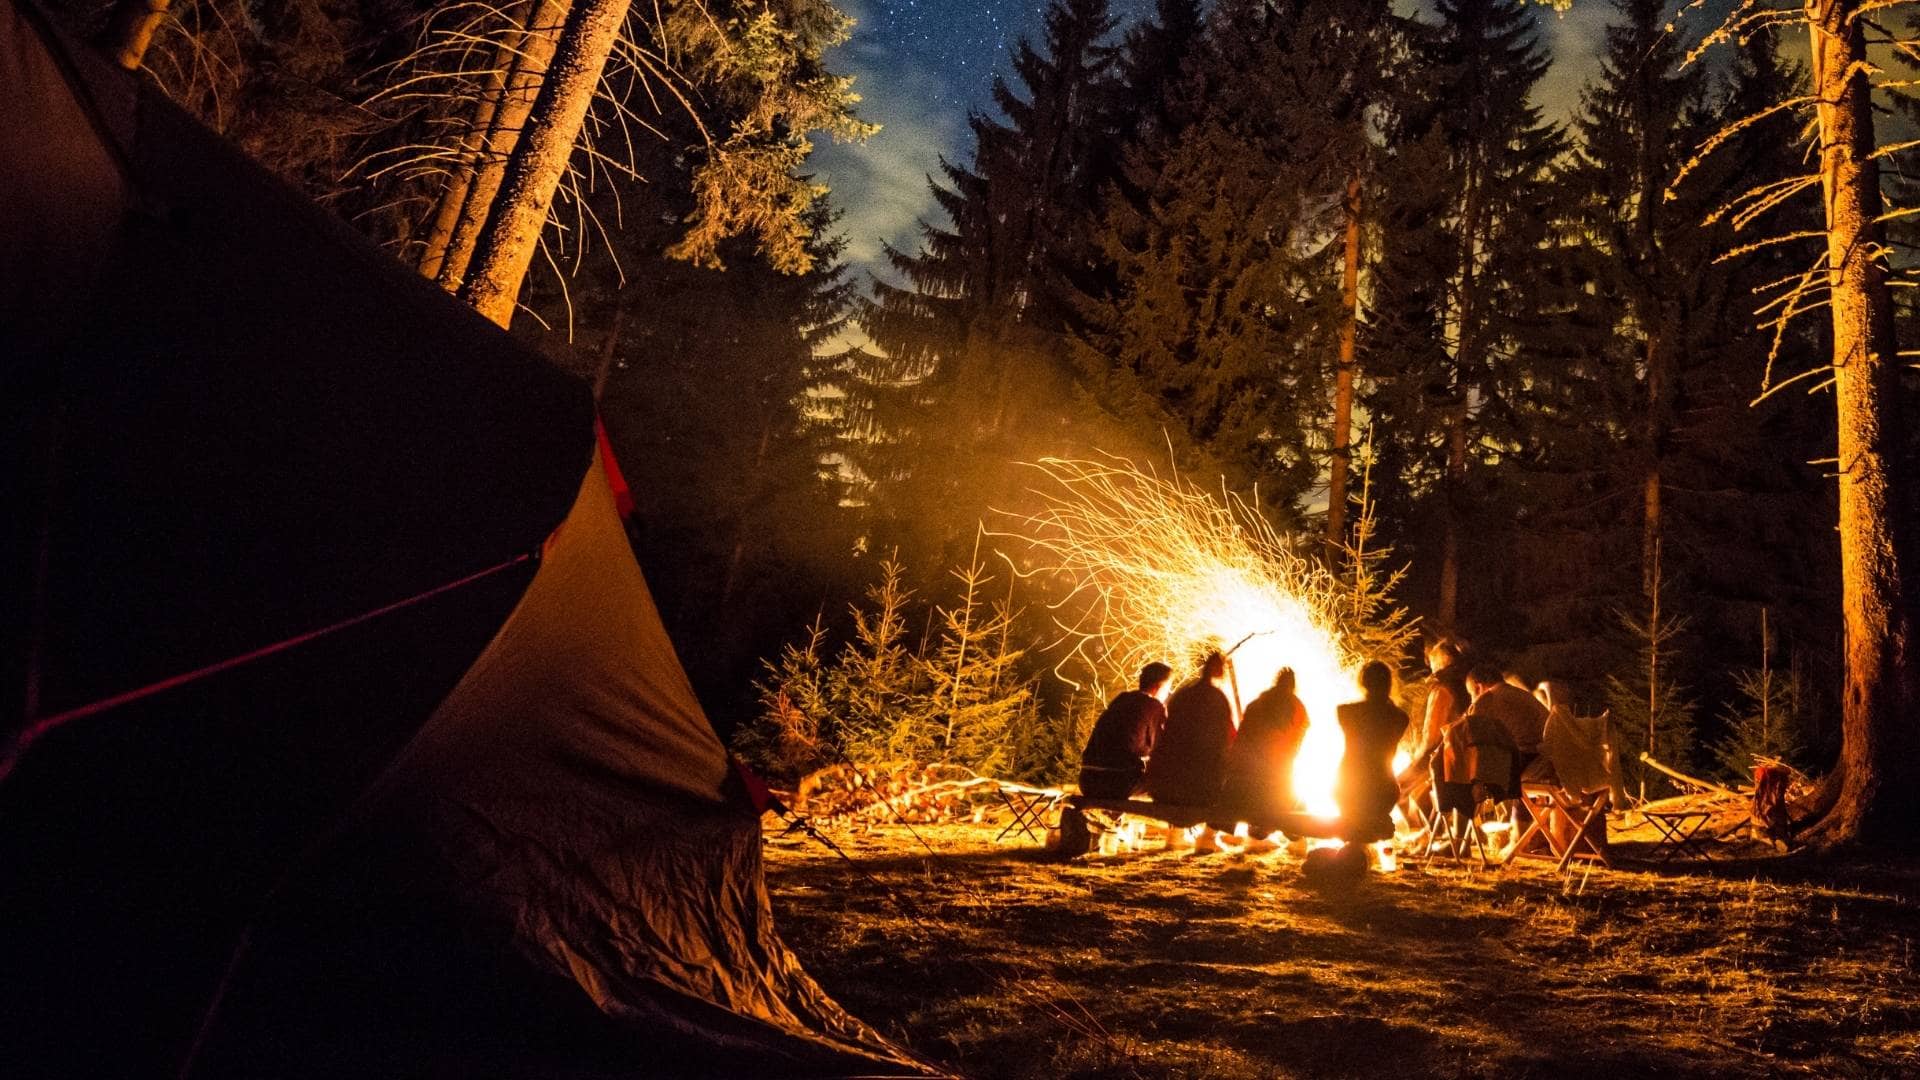 Group sitting around a campfire